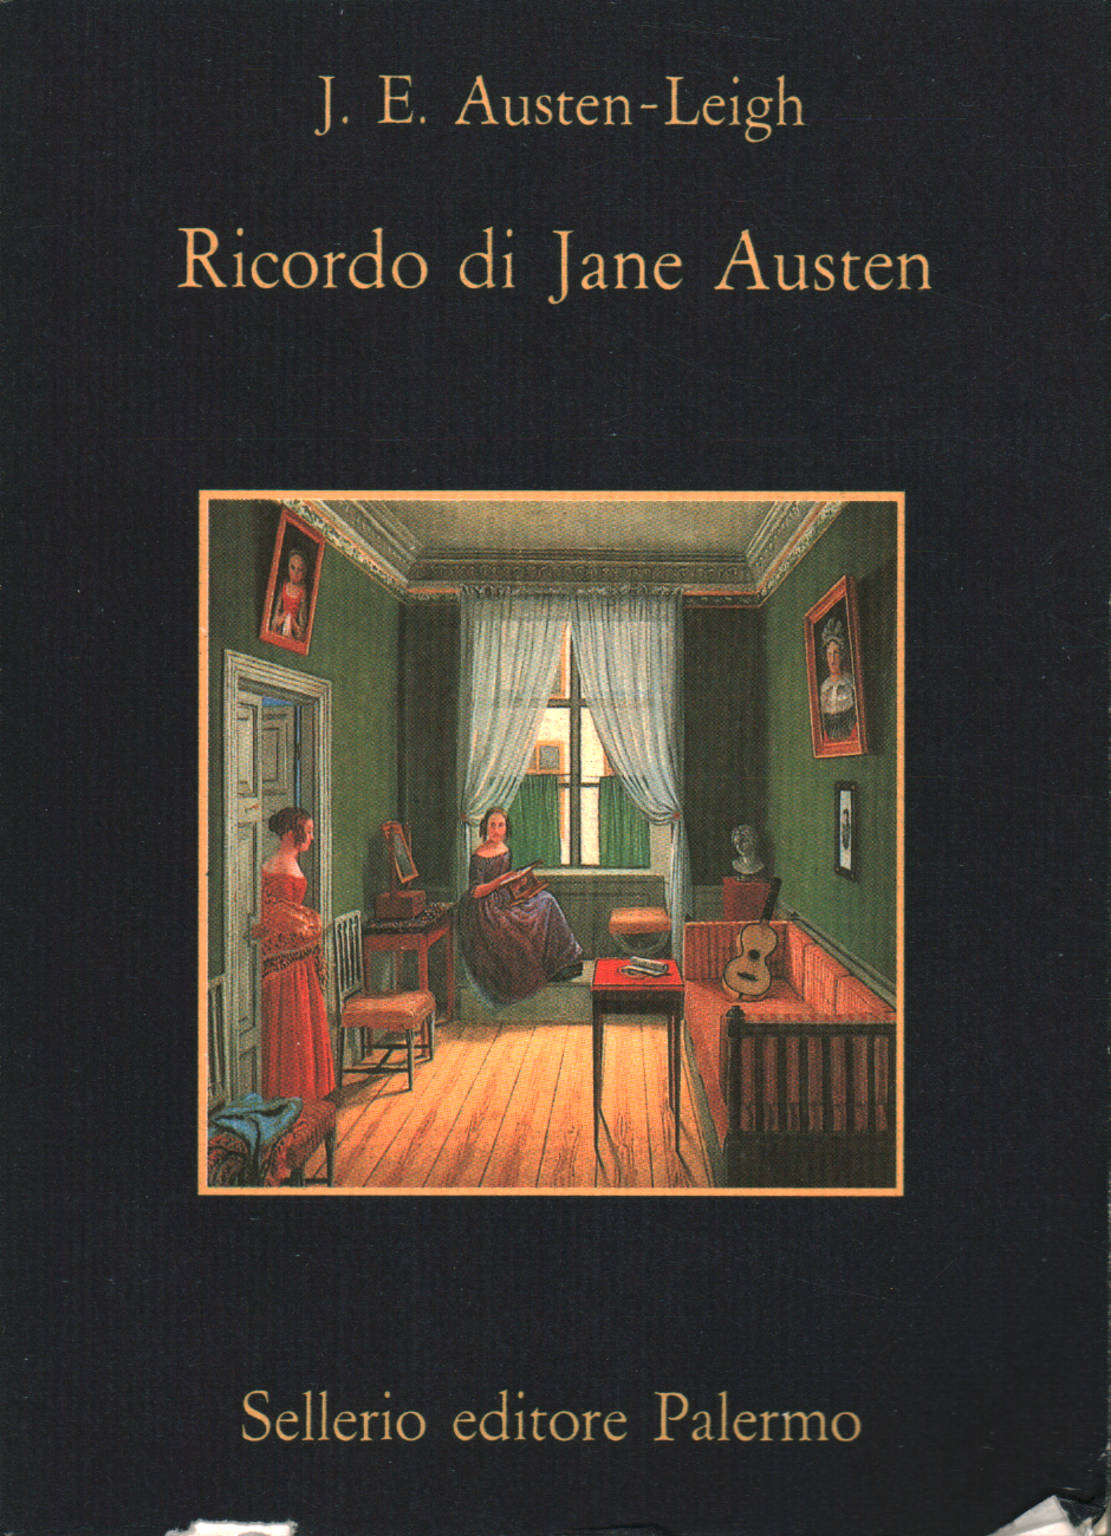 Ricordo di Jane Austen, J.E. Austen -Leigh